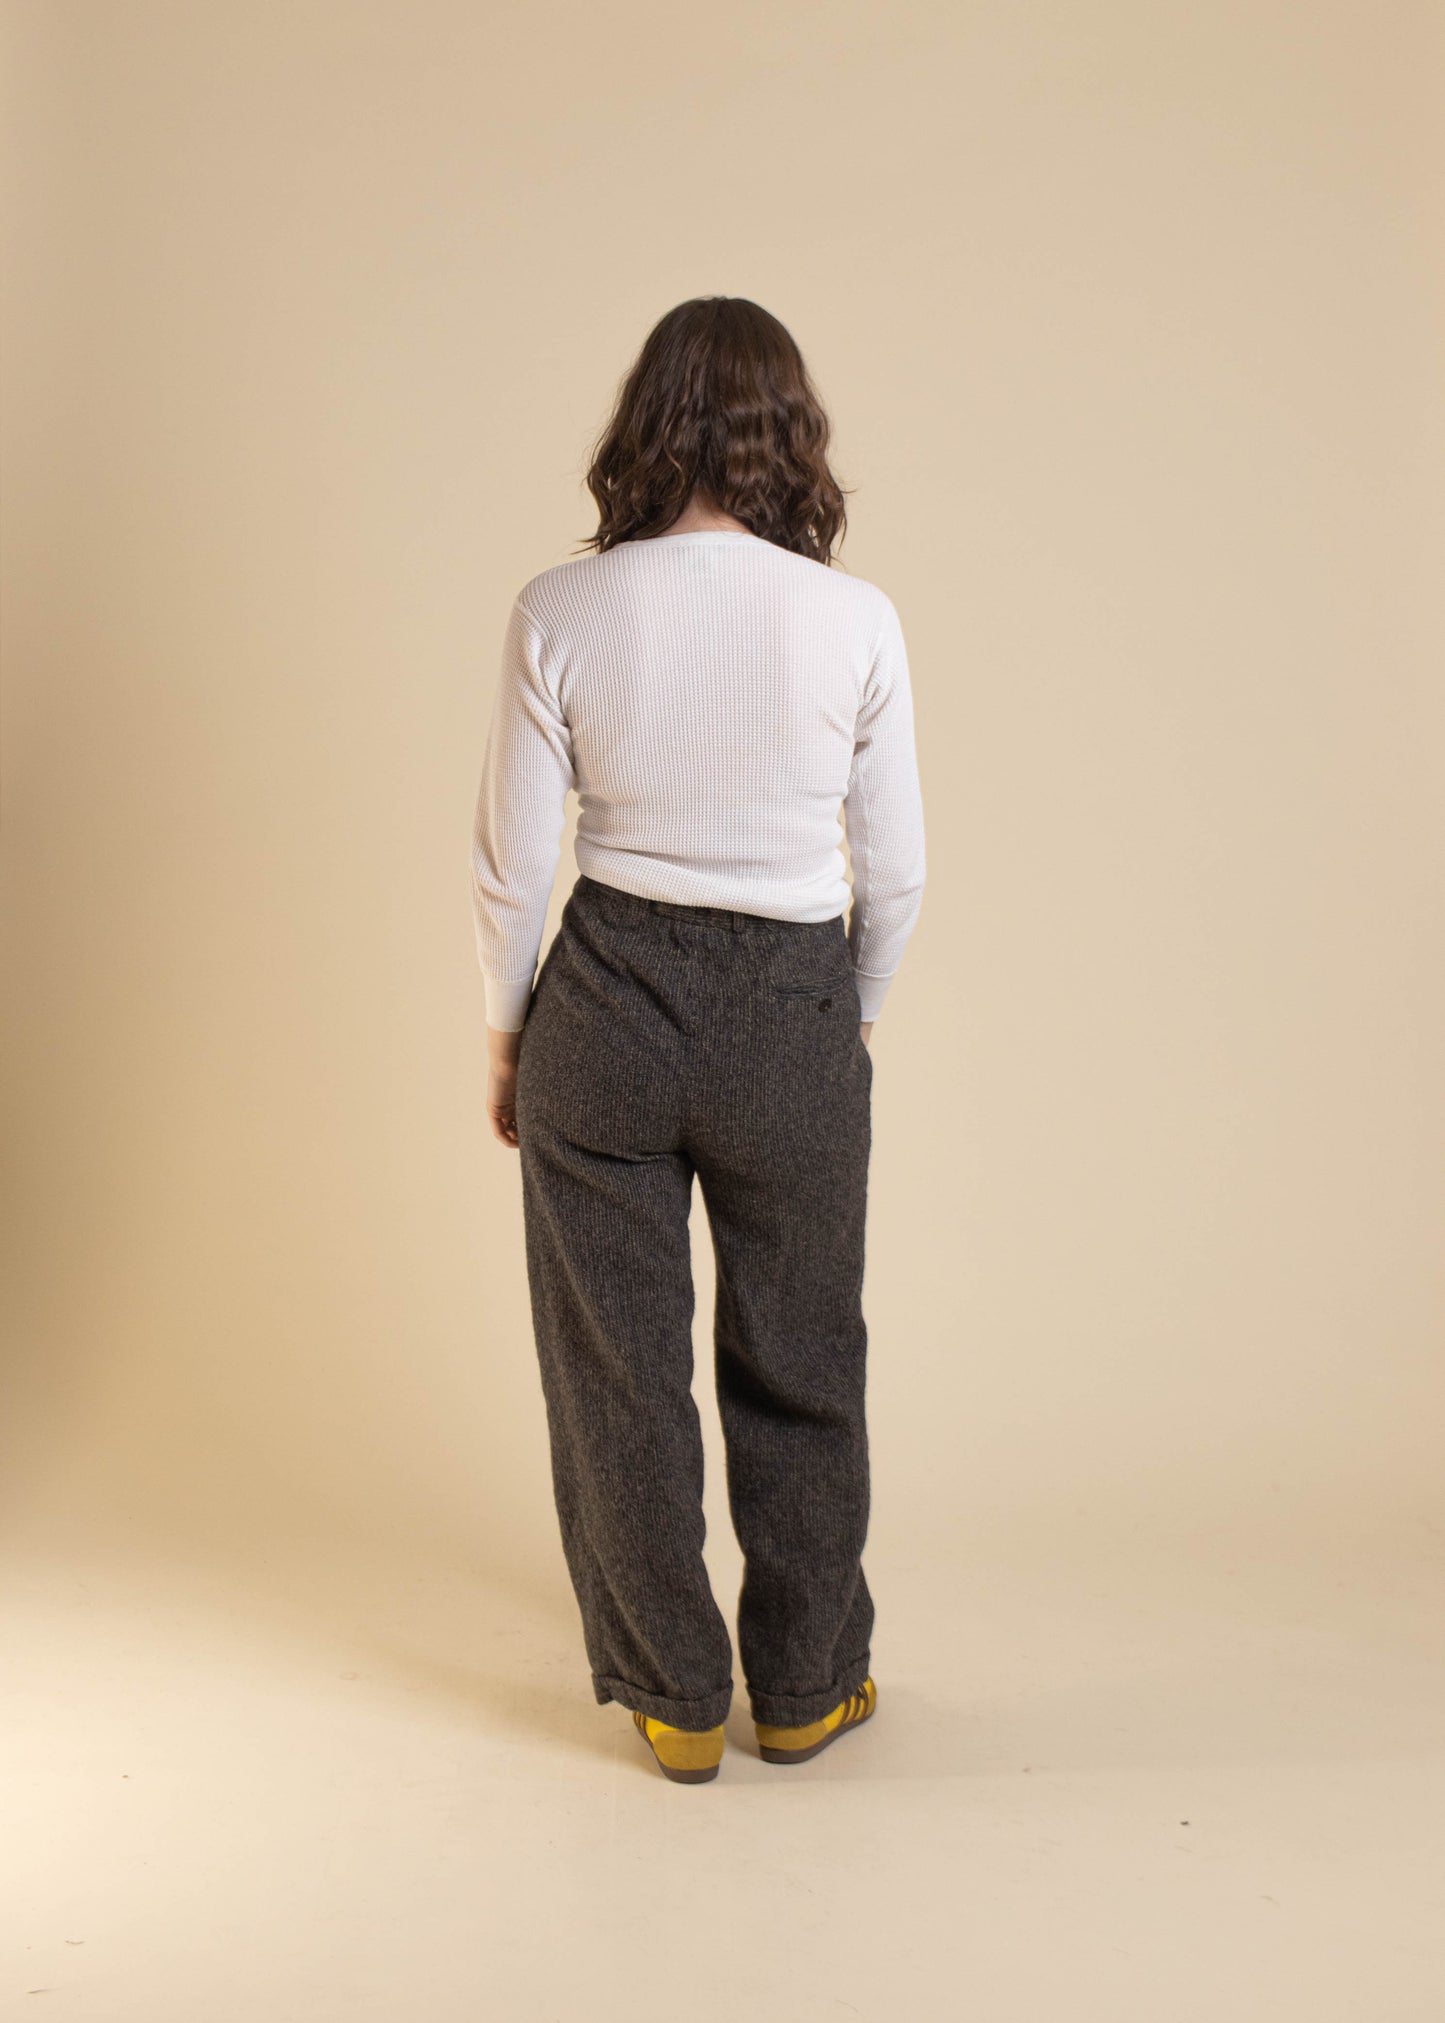 1950s Croque Monsieur Wool Touser Pants Size Women's 30 Men's 32